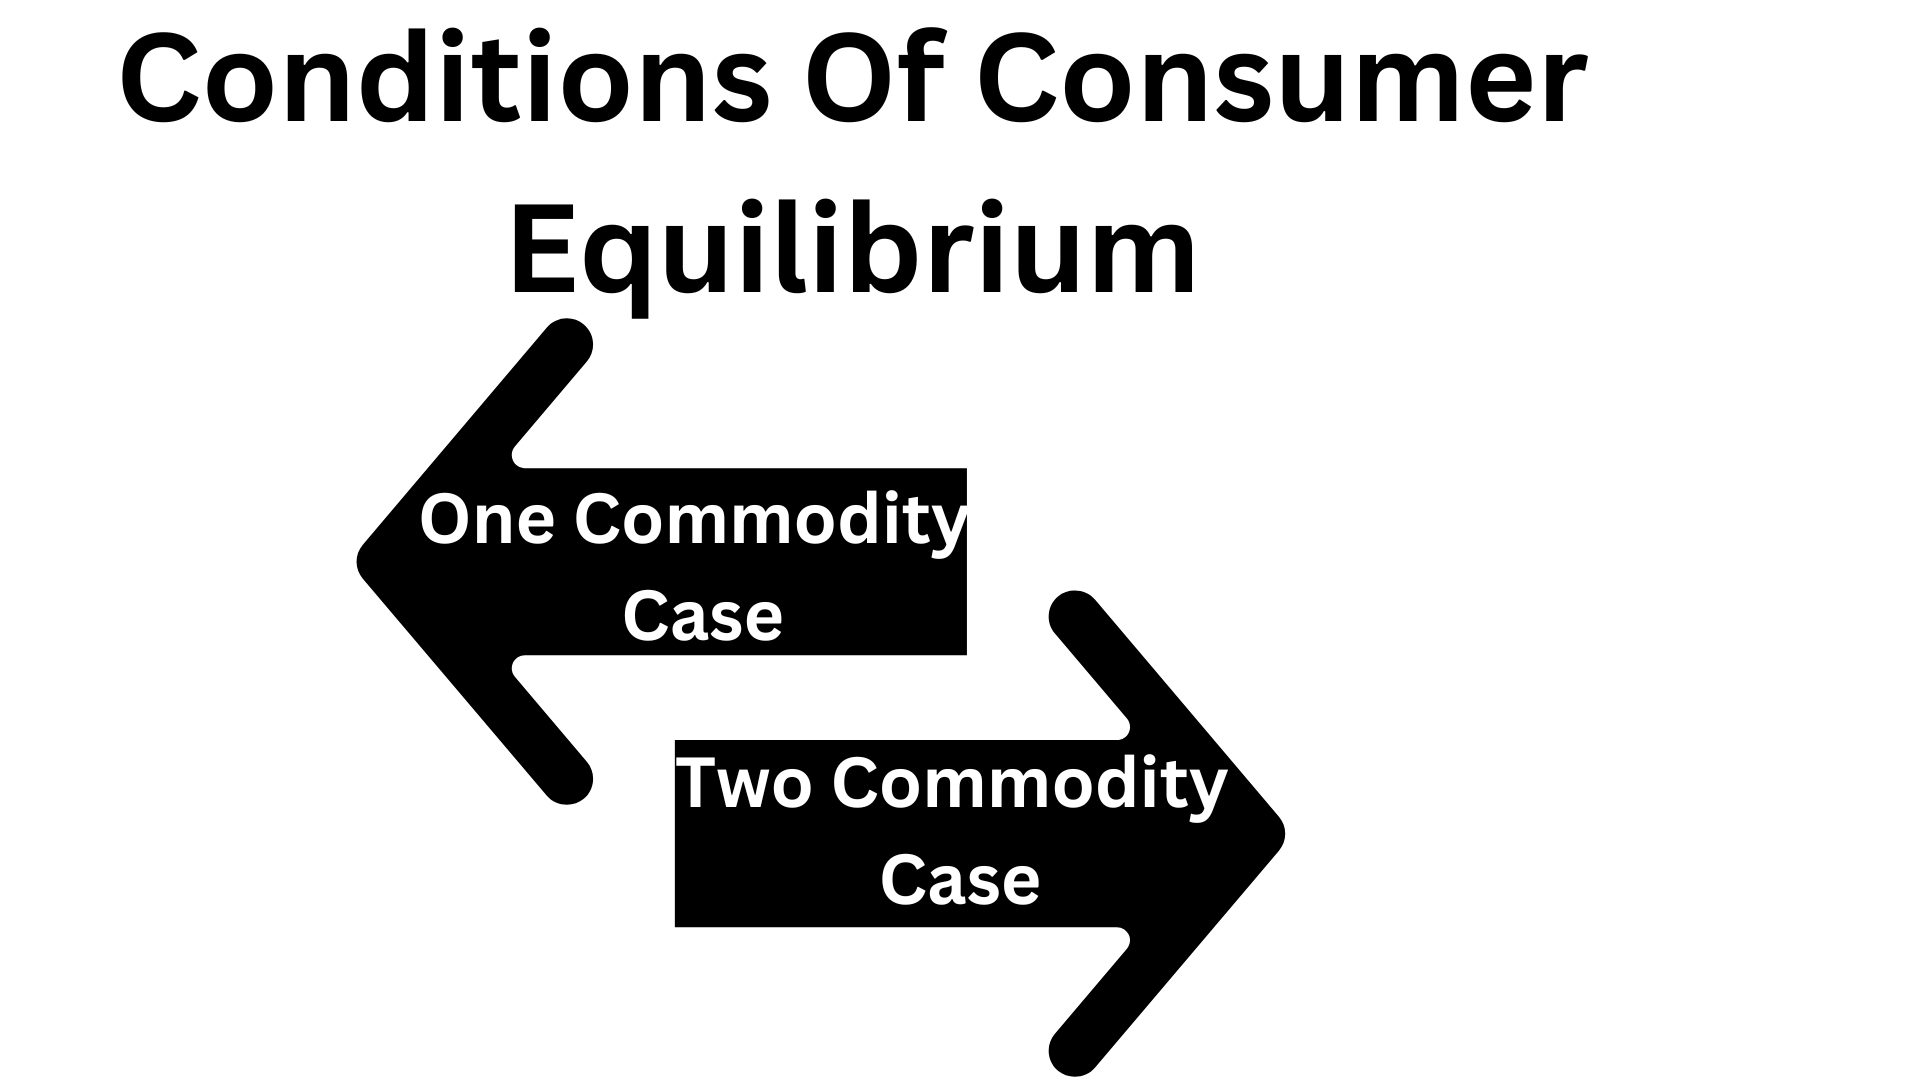 Conditions of Consumer's Equilibrium Class 11 Notes